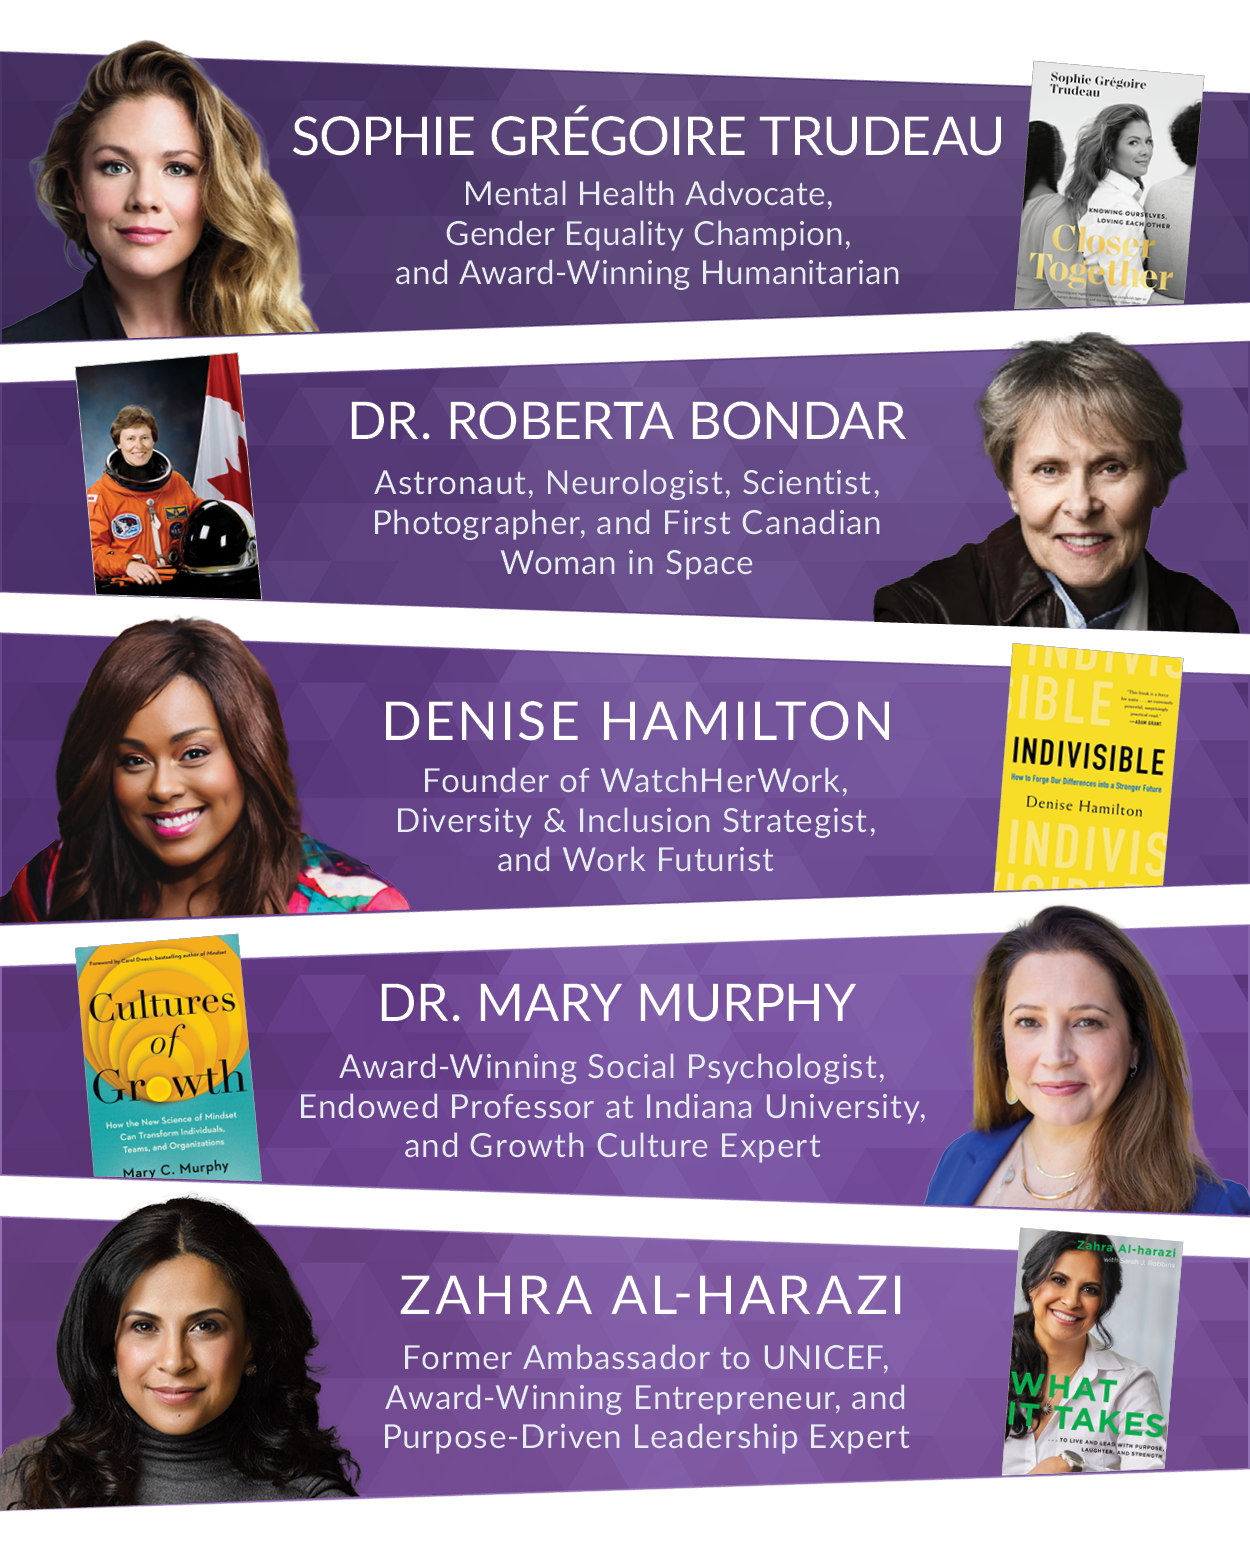 Speaker lineup including Sophie Gregoire Trudeau, Dr. Roberta Bondar, Denise Hamilton, Dr. Mary Murphy, Zahra Al-harazi